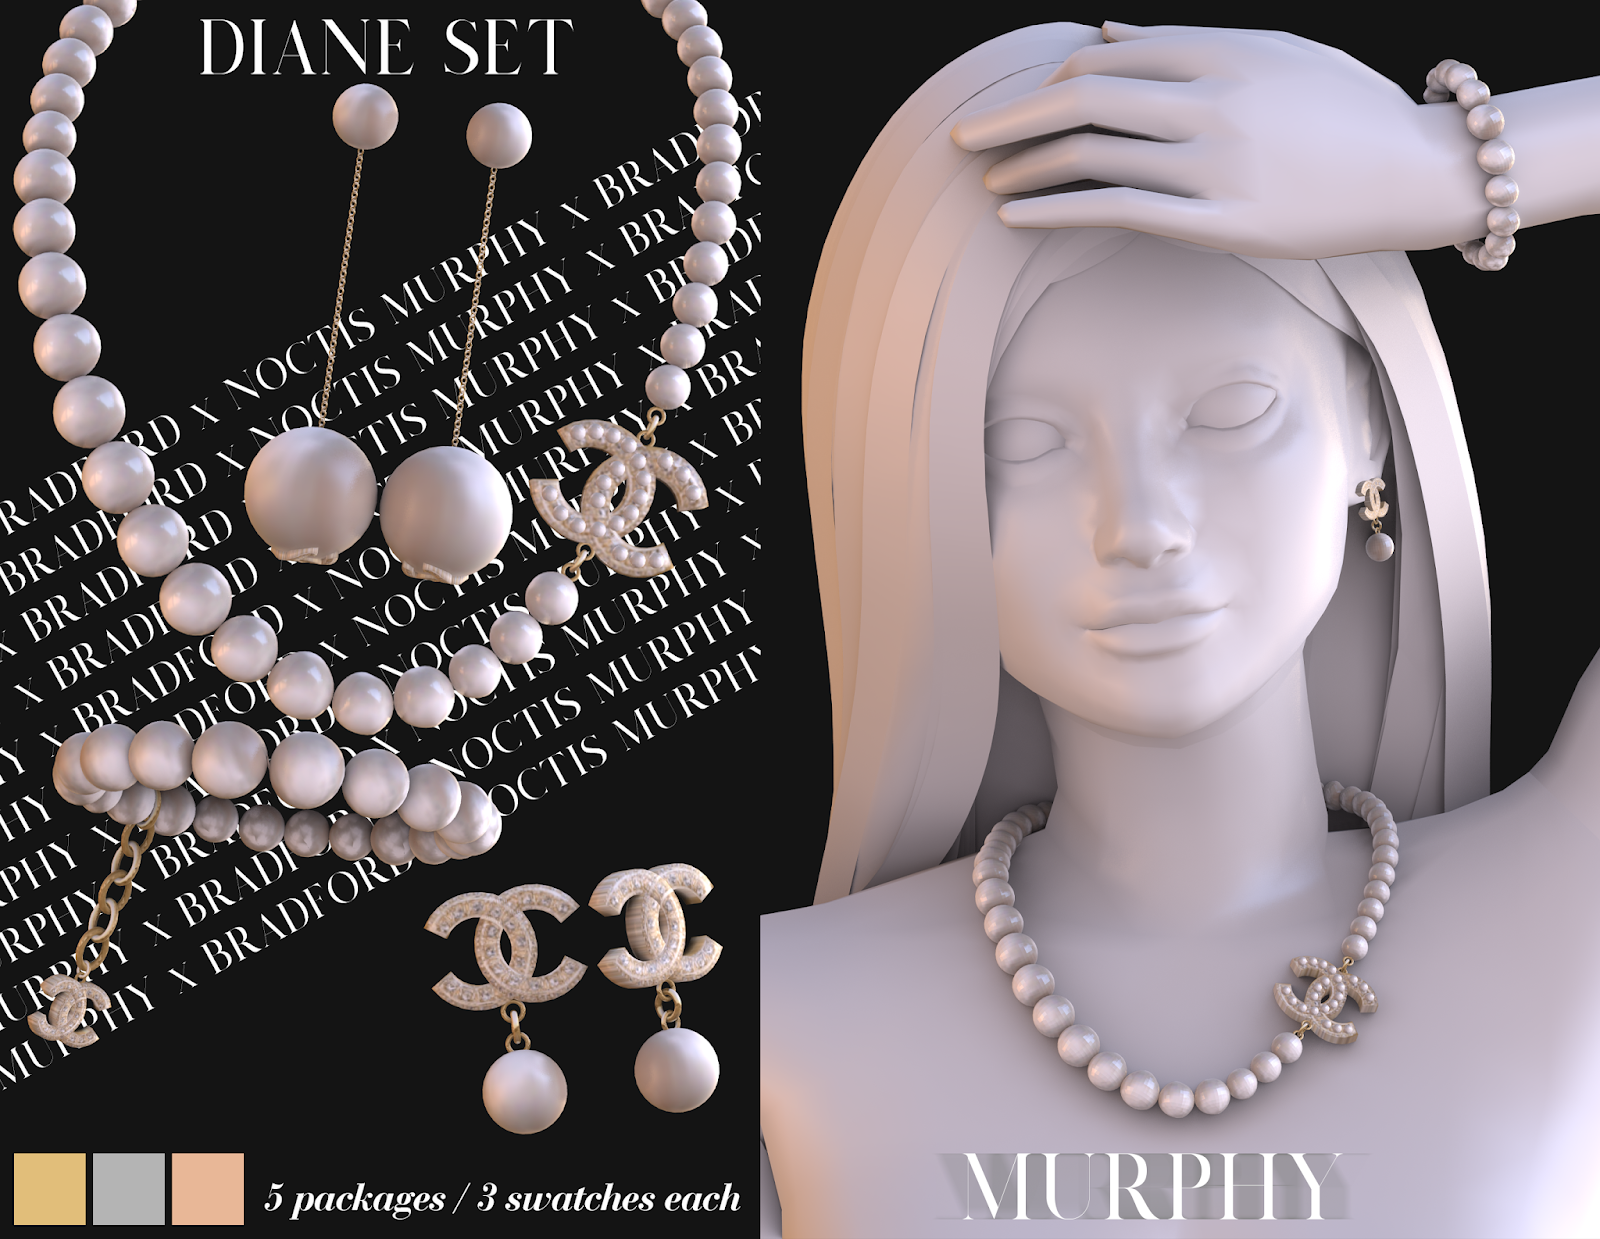 Diane Set [Chanel - Day 5] - MURPHY BRADFORD x NOCTIS